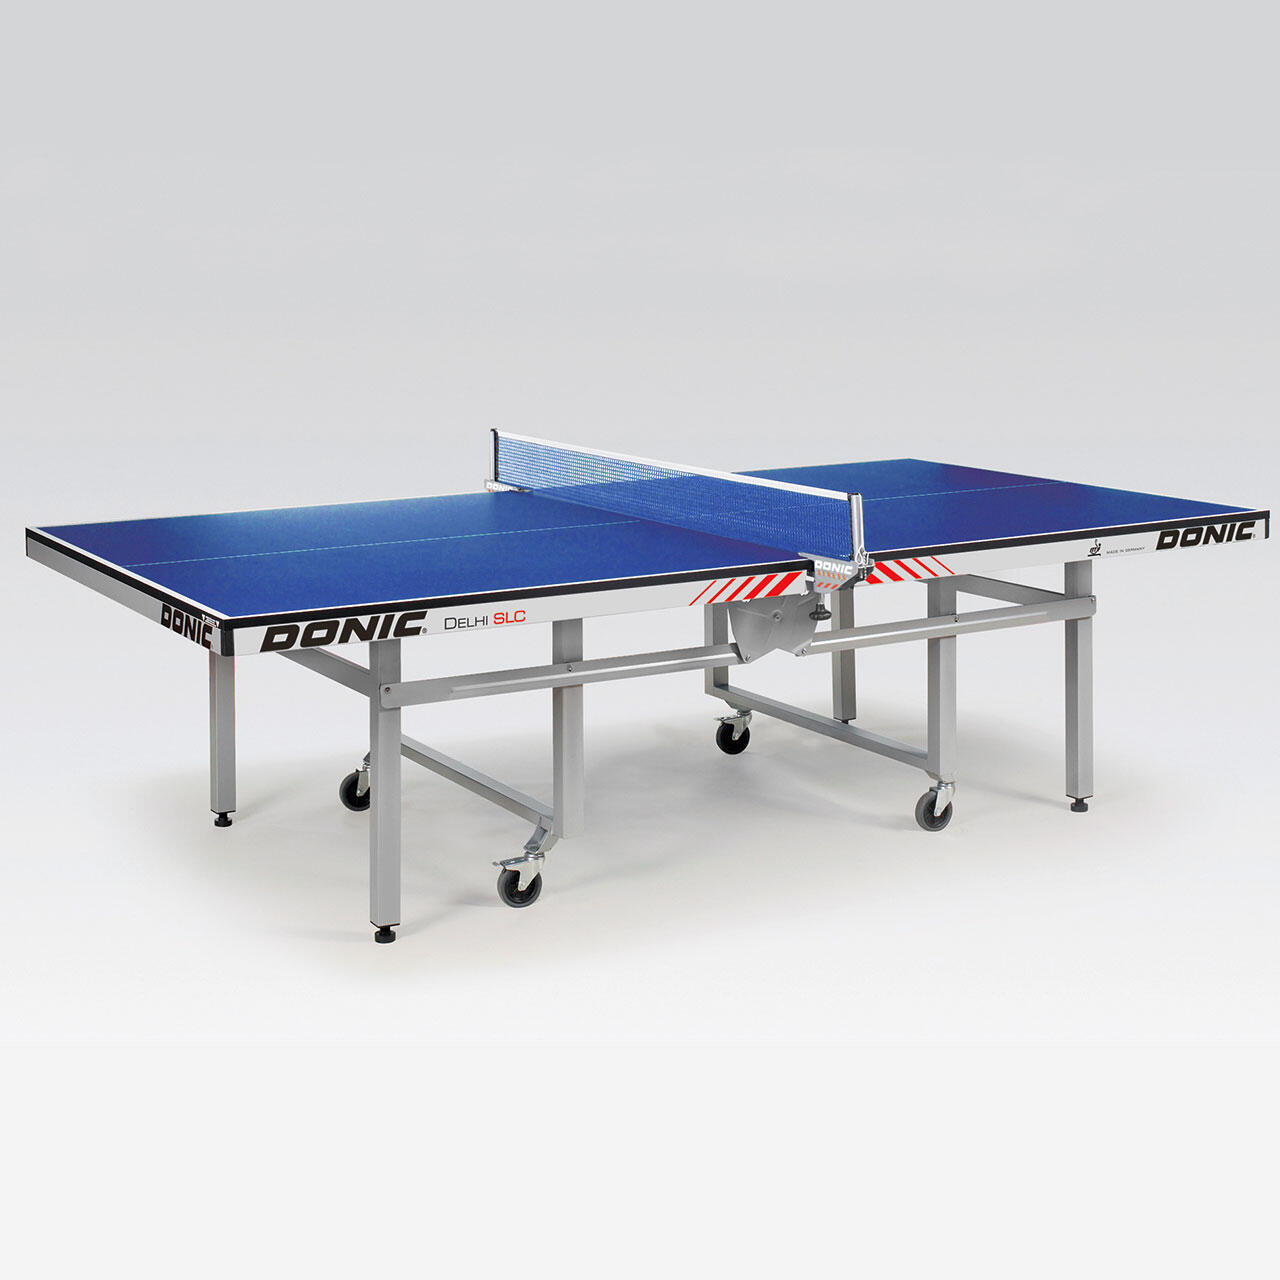 Donic Delhi SLC Blue Table Tennis Table 3/3